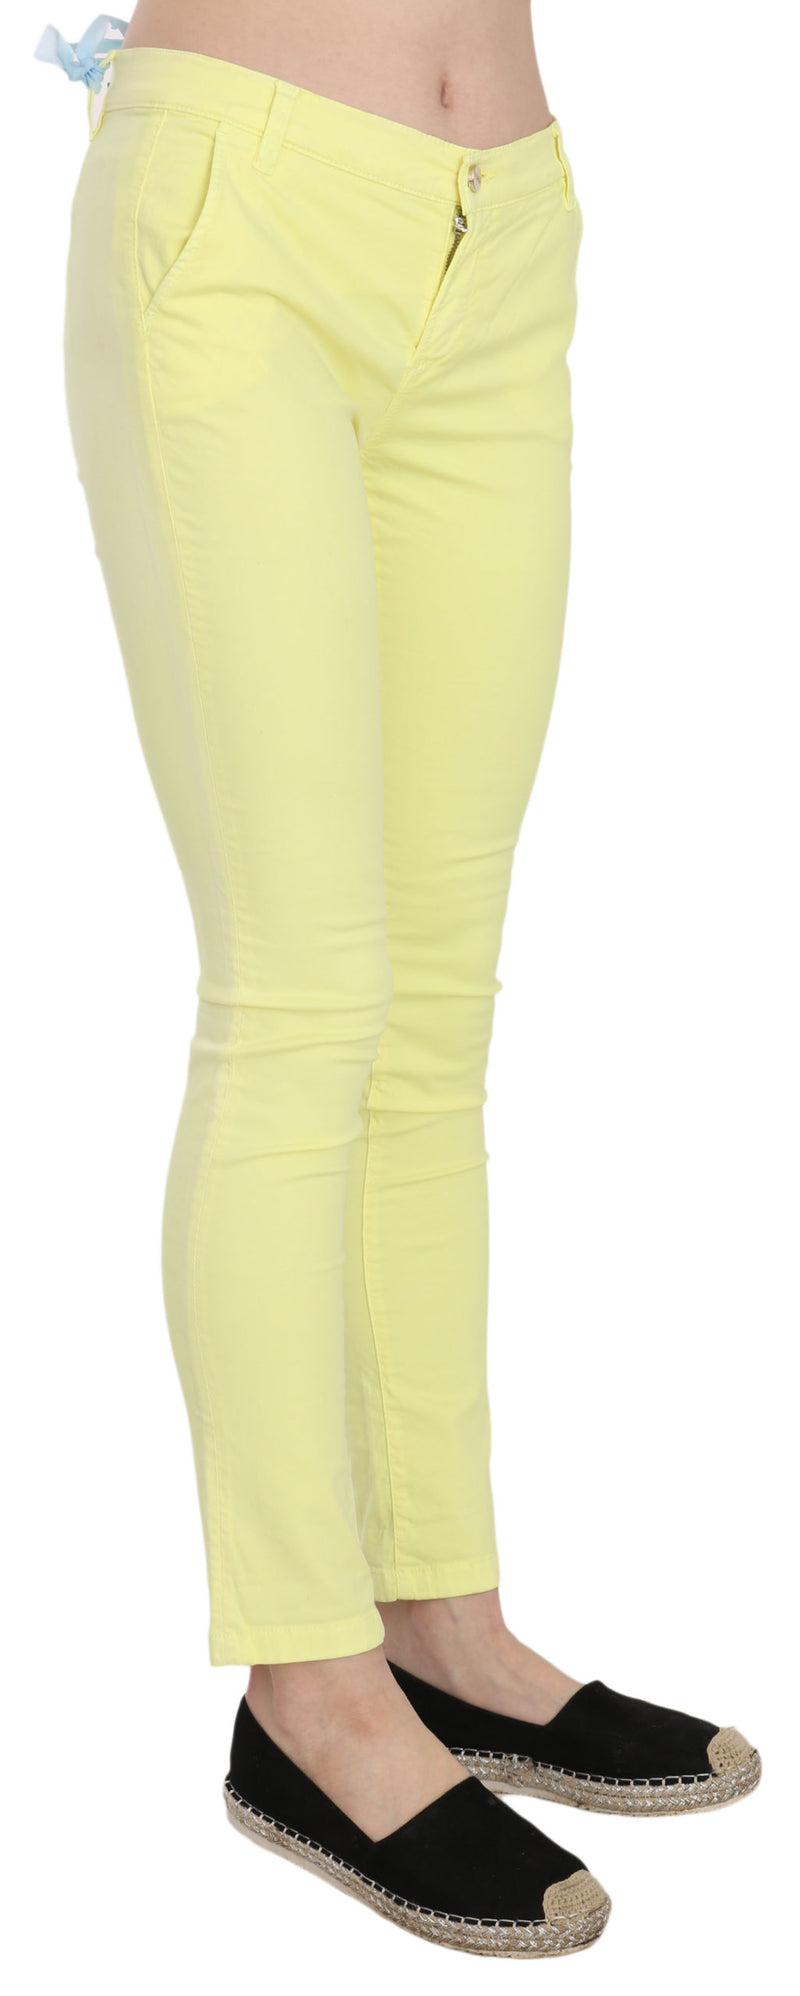 PINKO Yellow Cotton Stretch Low Waist Skinny Casual Trouser Women's Pants